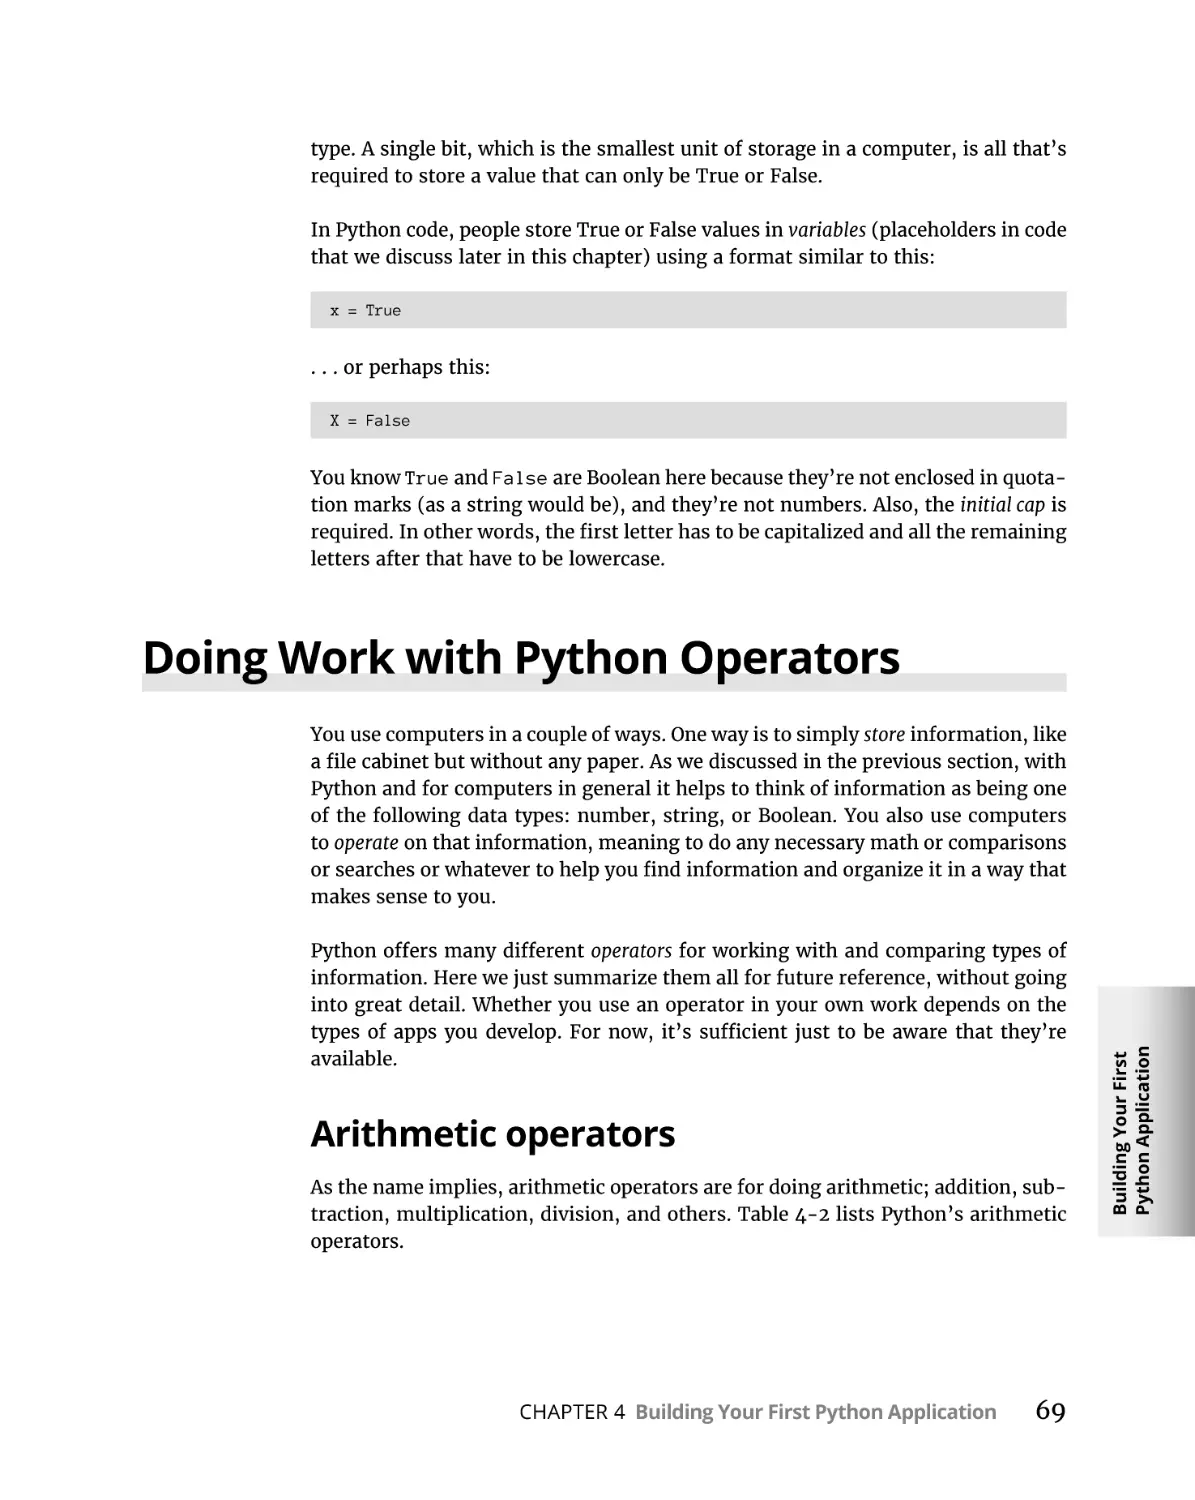 Doing Work with Python Operators
Arithmetic operators